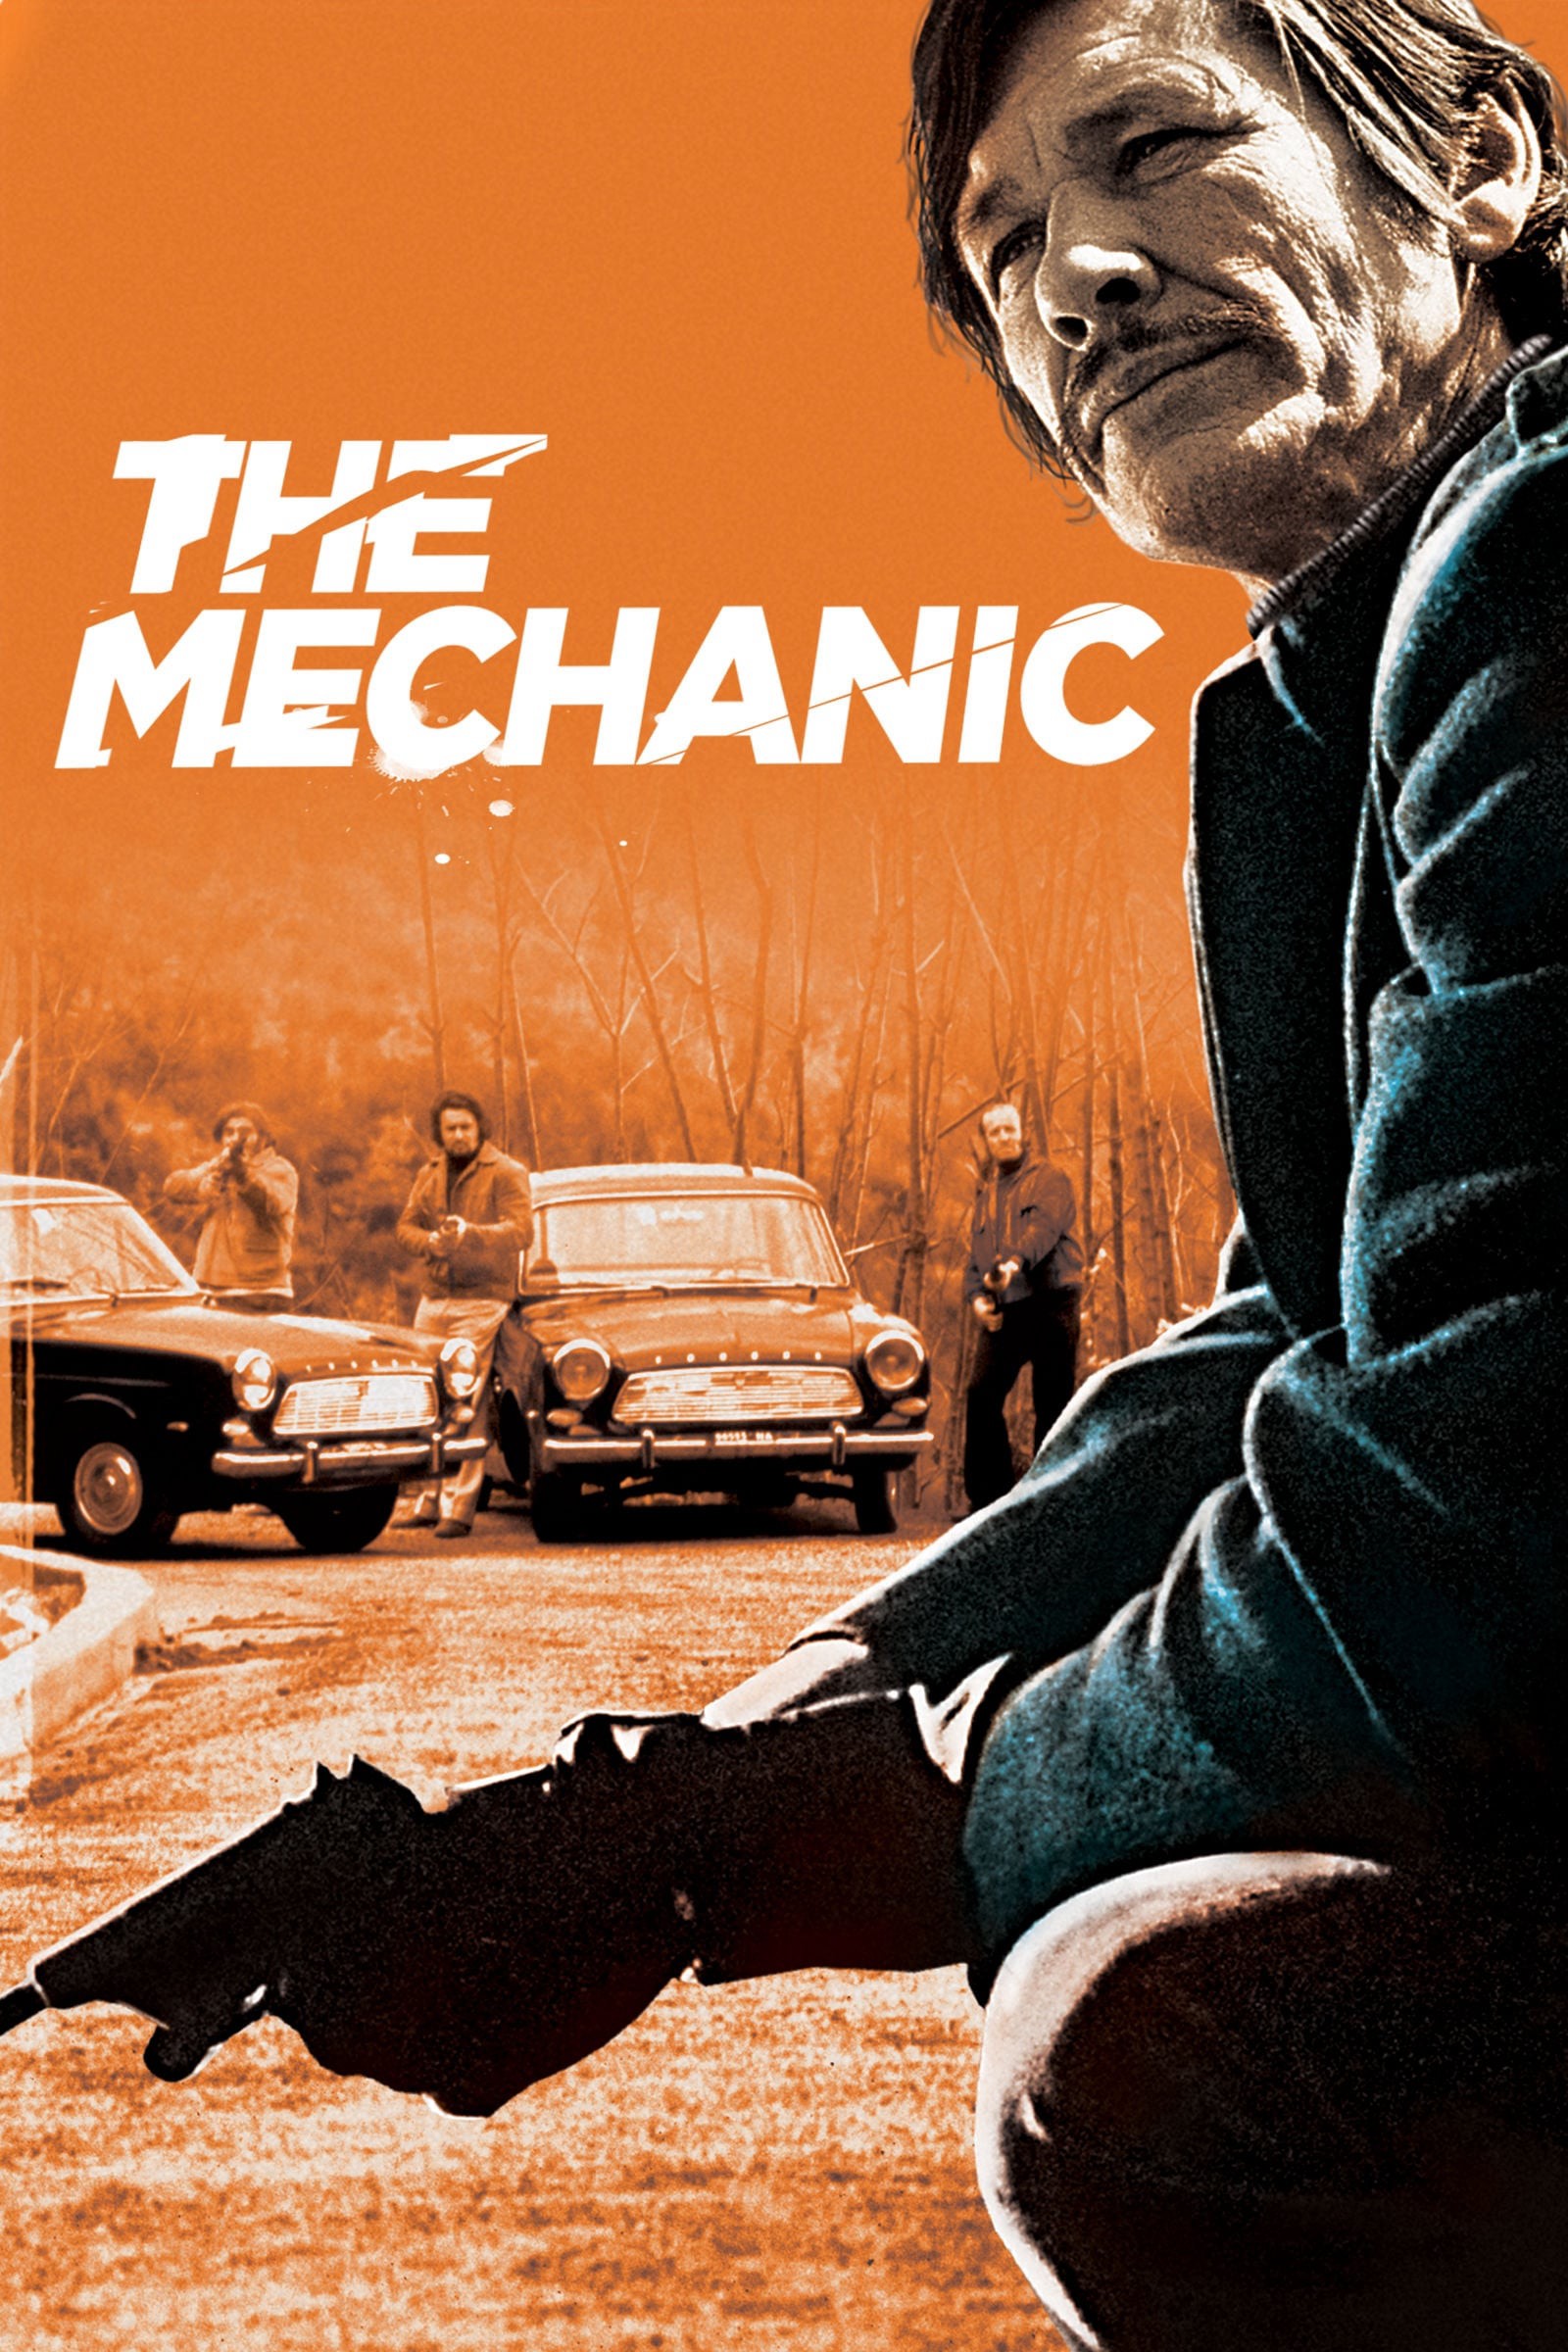 The Mechanic 1972